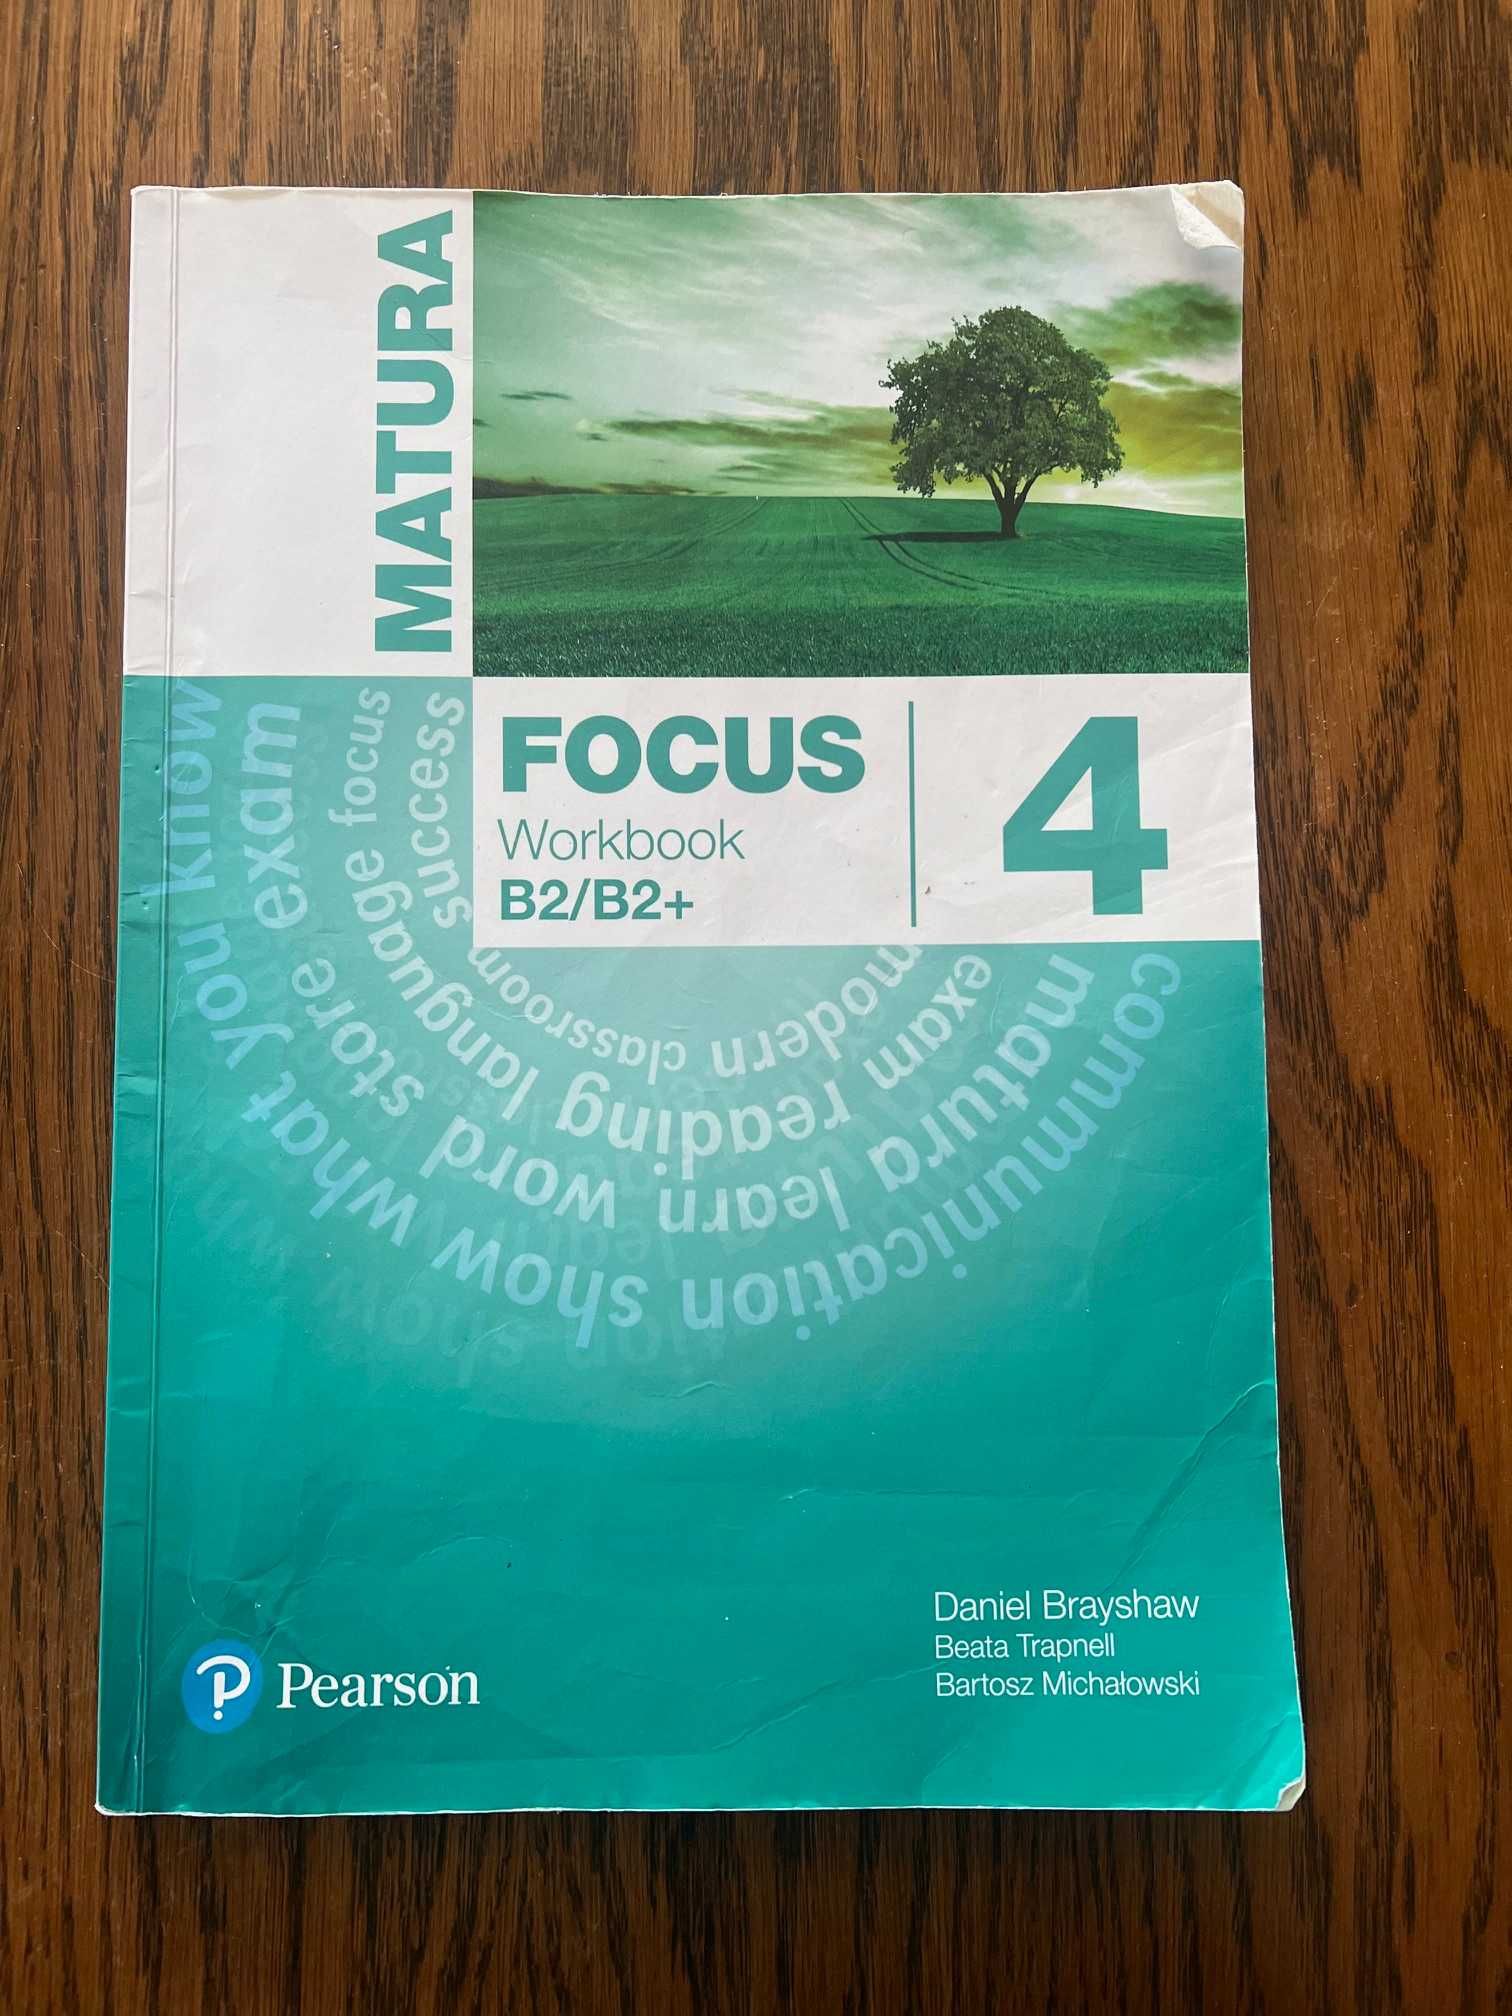 Focus Workbook 4